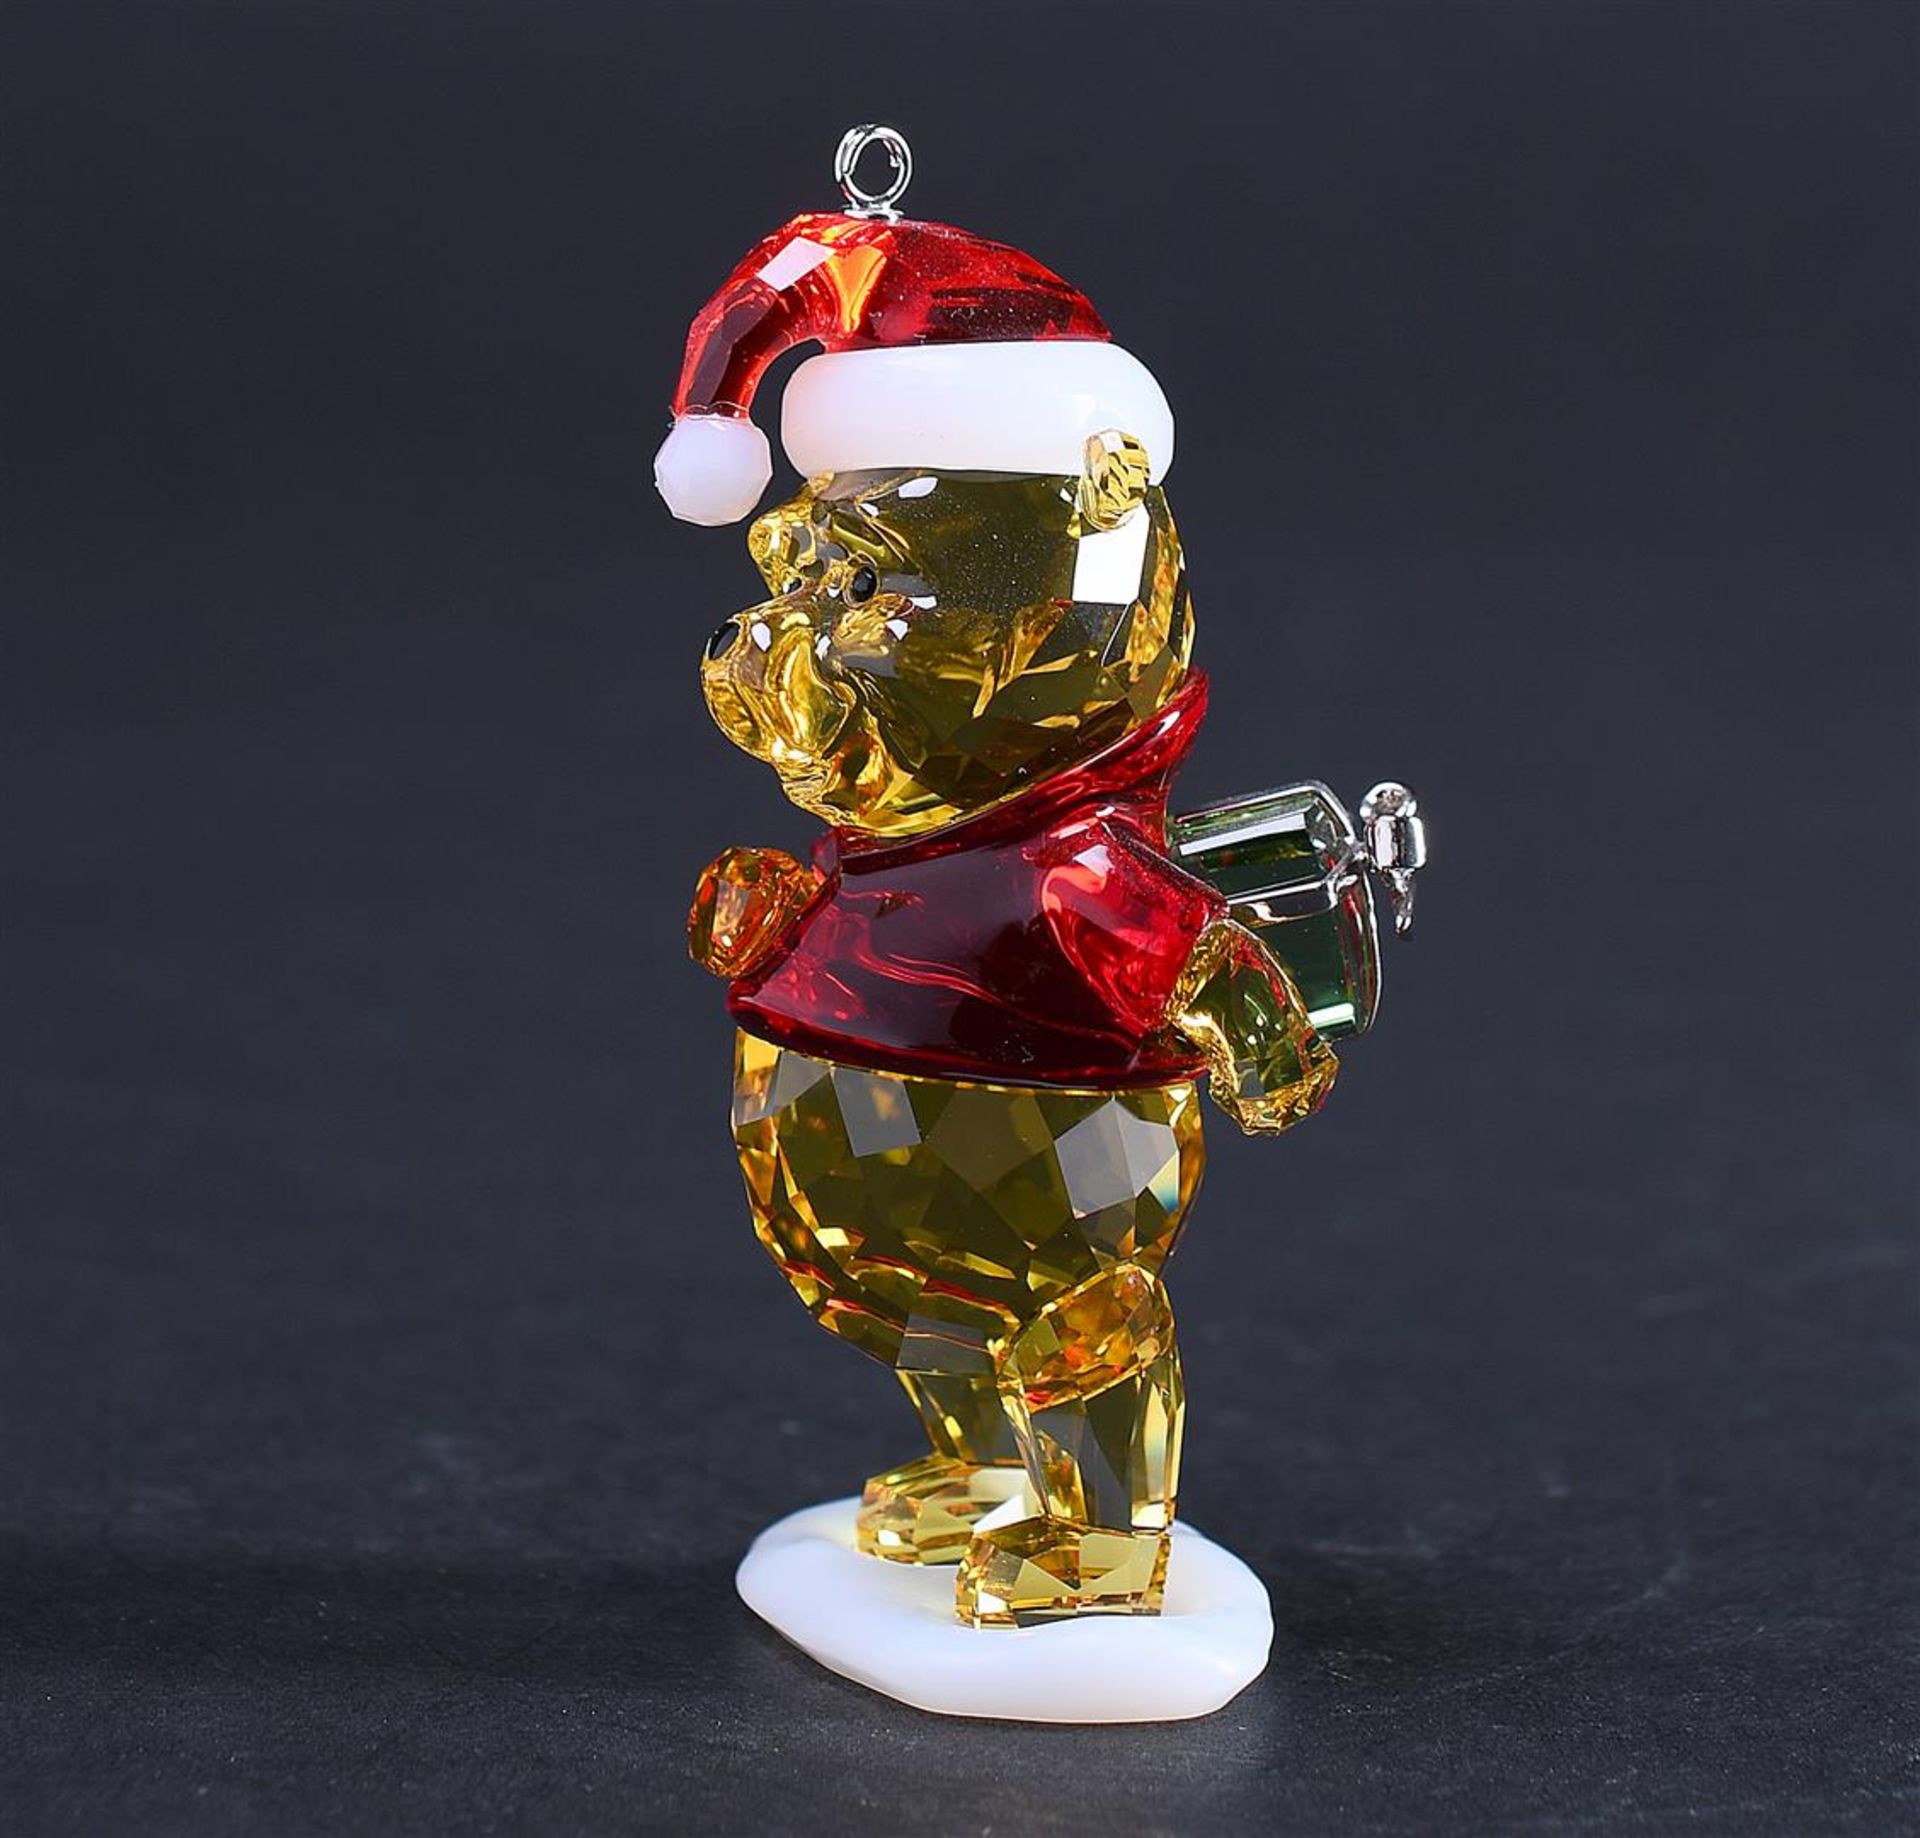 Swarovski Disney, Winnie the Pooh Christmas ornament, Year of release 2014, 5030561, Including origi